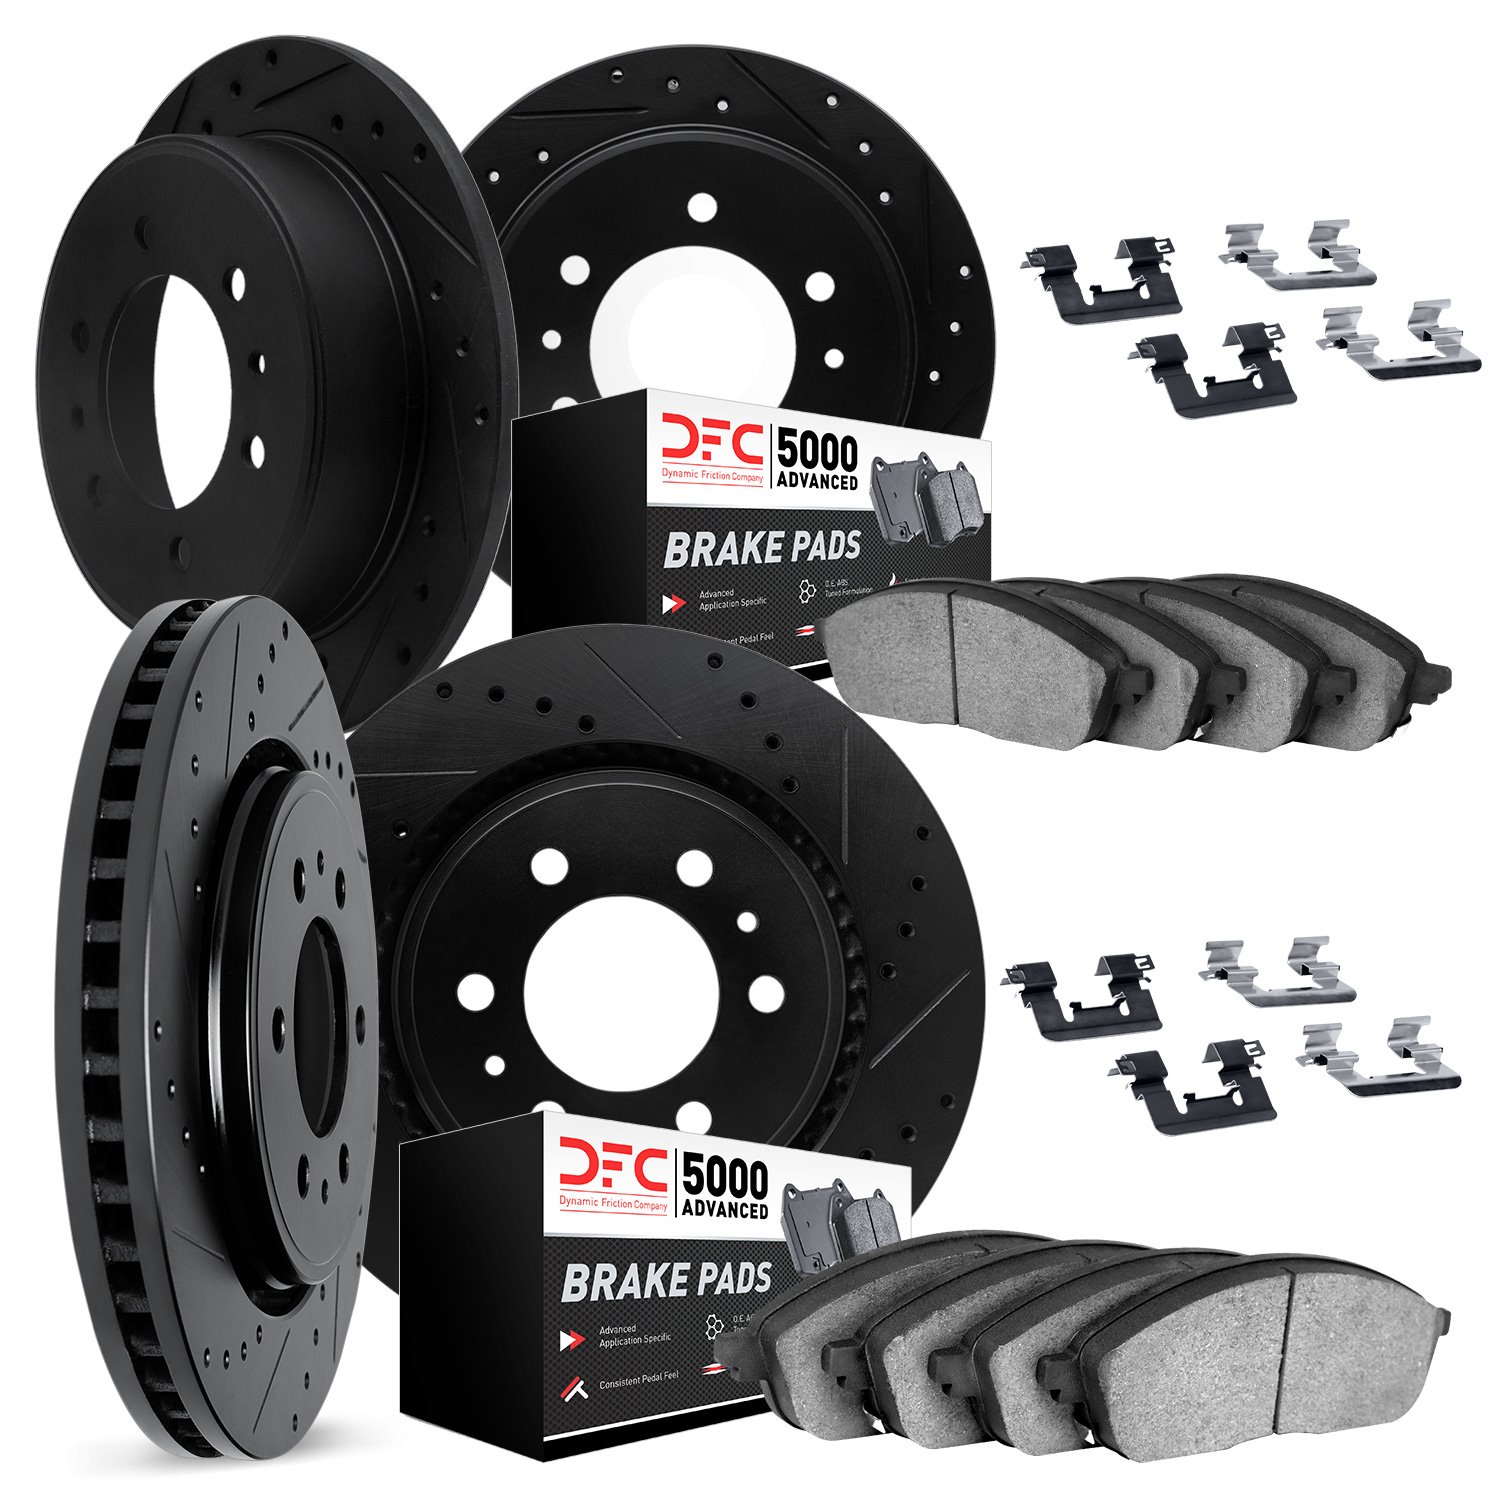 8514-40247 Drilled/Slotted Brake Rotors w/5000 Advanced Brake Pads Kit & Hardware [Black], Fits Select Multiple Makes/Models, Po